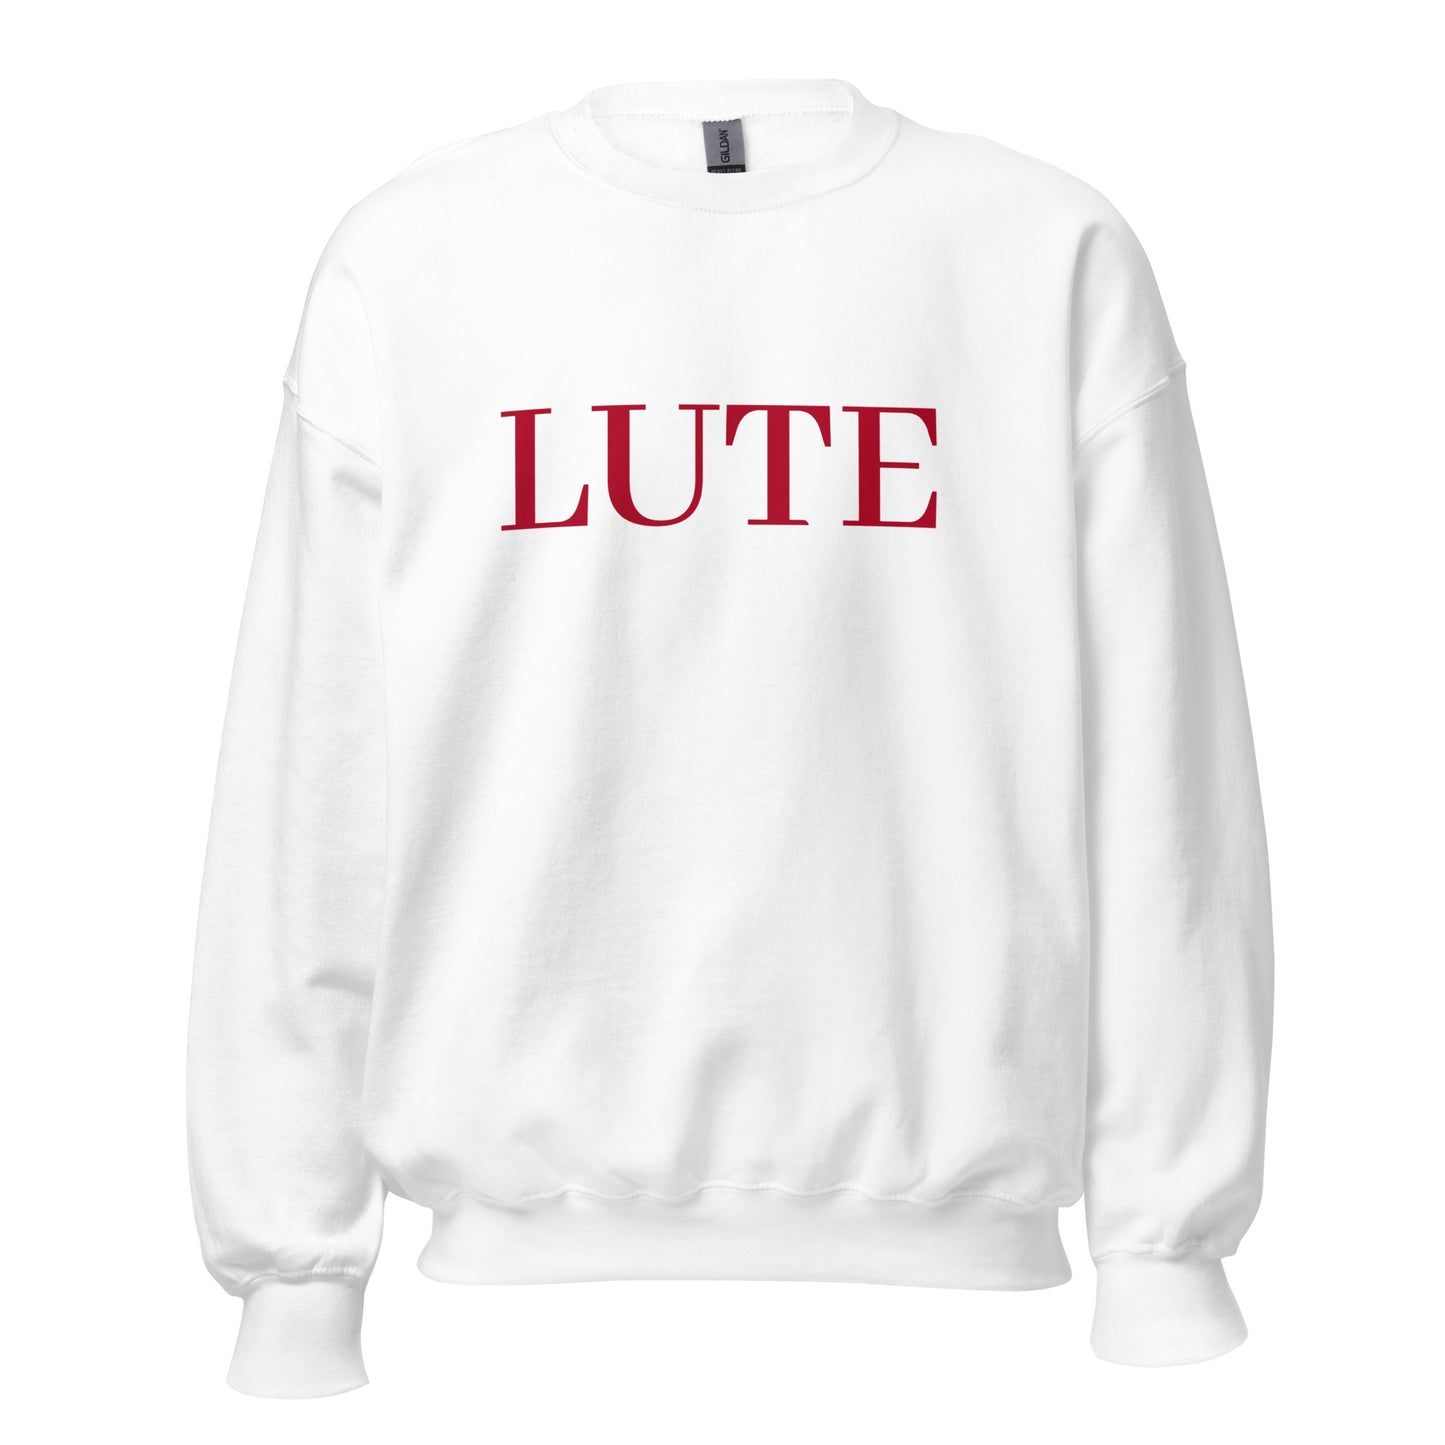 LUTE - Unisex Sweatshirt